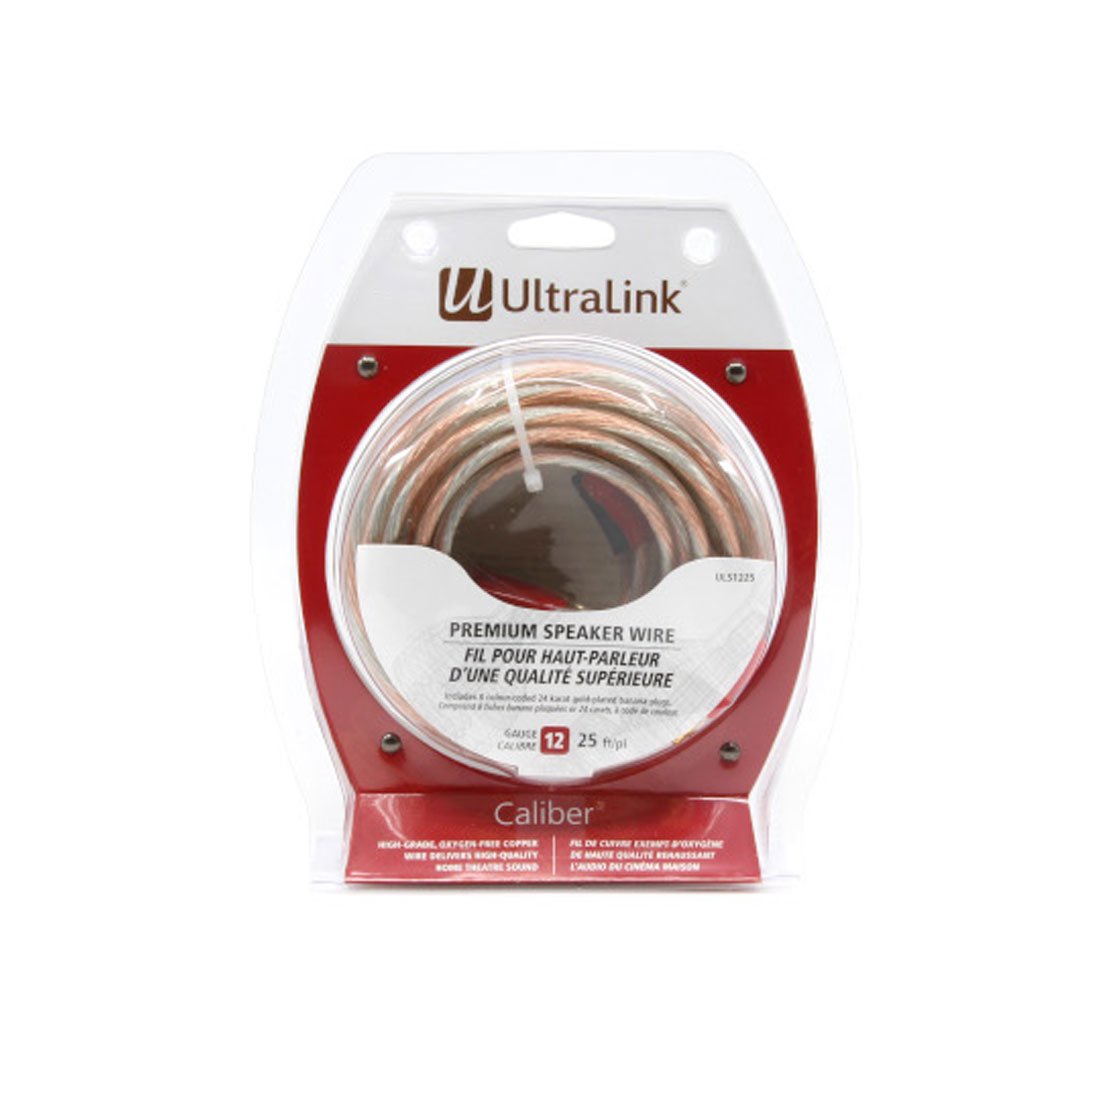 UltraLink ULS1225 Caliber Premium Speaker Wire 12AWG